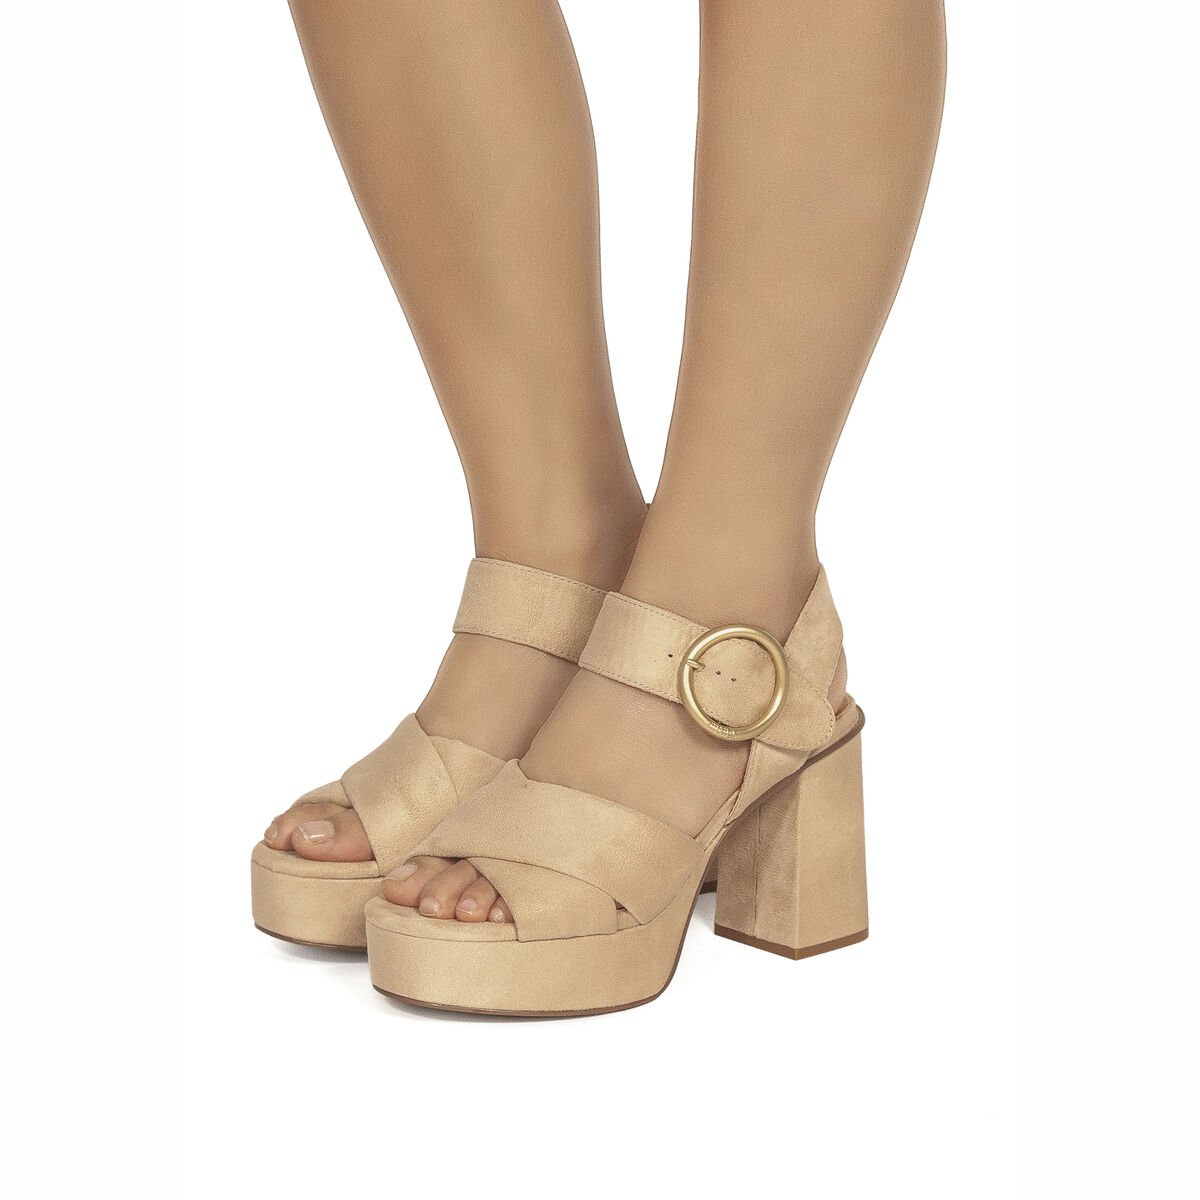 Sandalias de tacon de Mujer modelo SINDY de MTNG image number 1